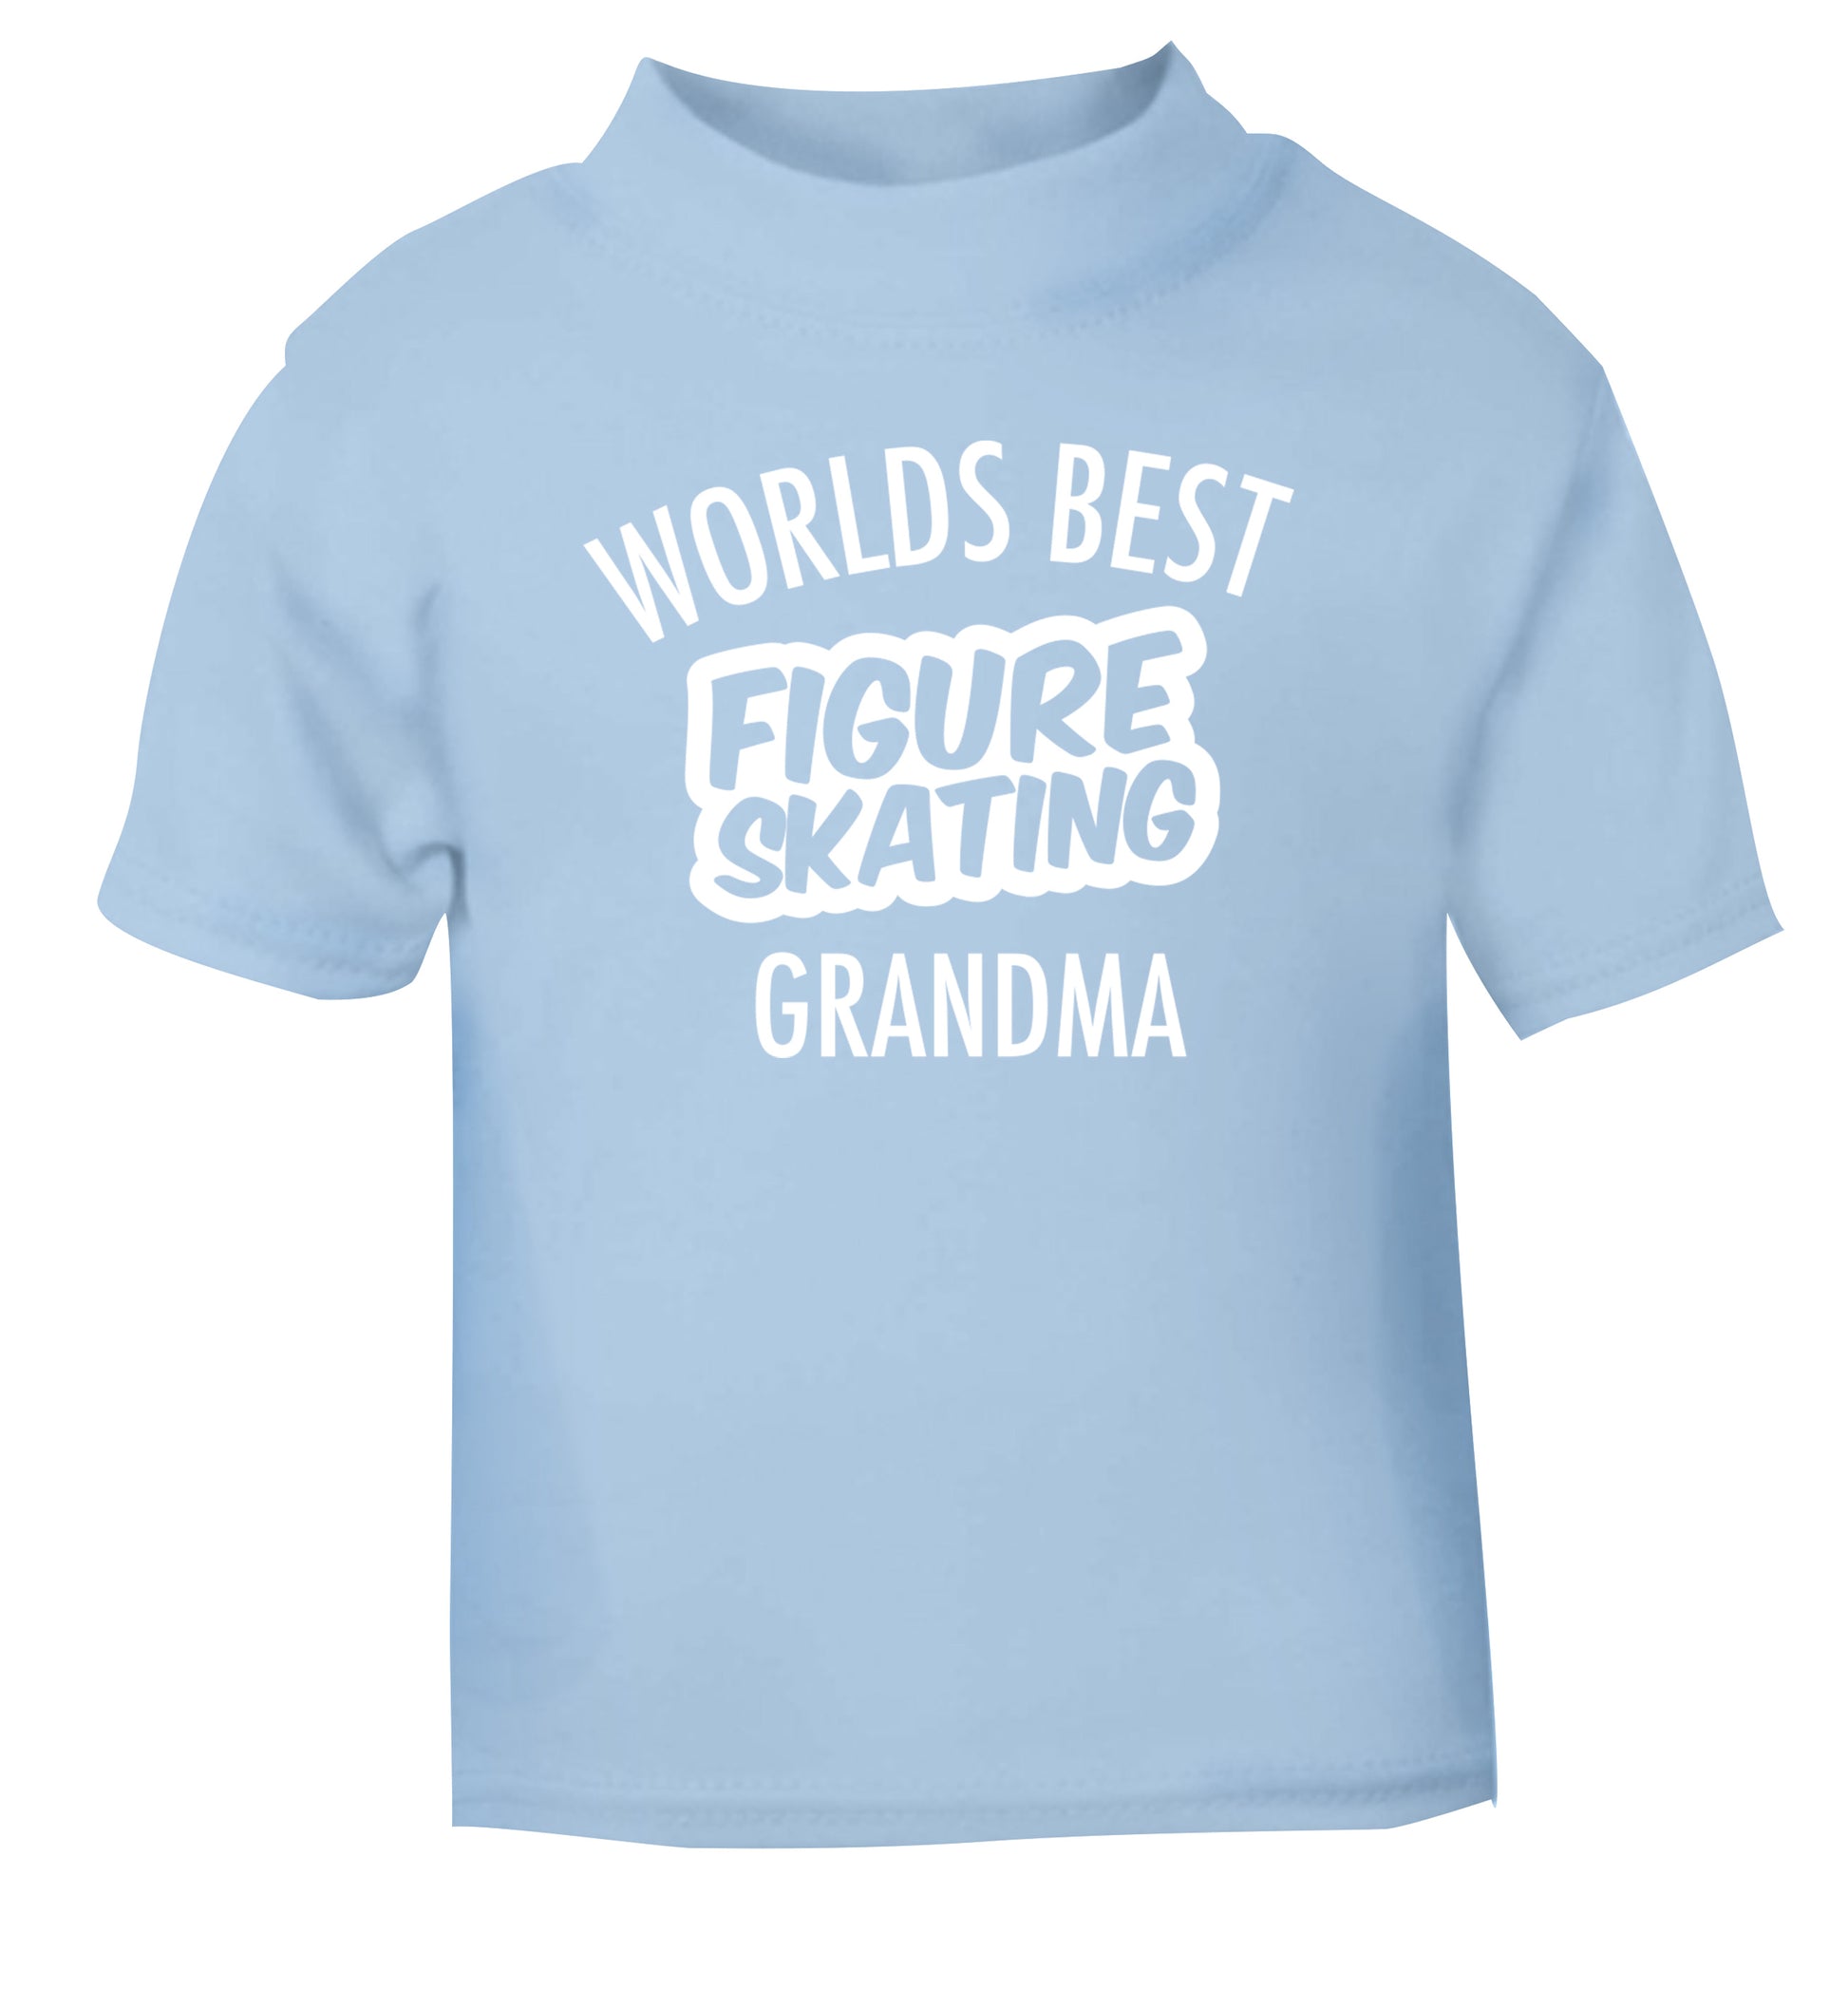 Worlds best figure skating grandma light blue Baby Toddler Tshirt 2 Years